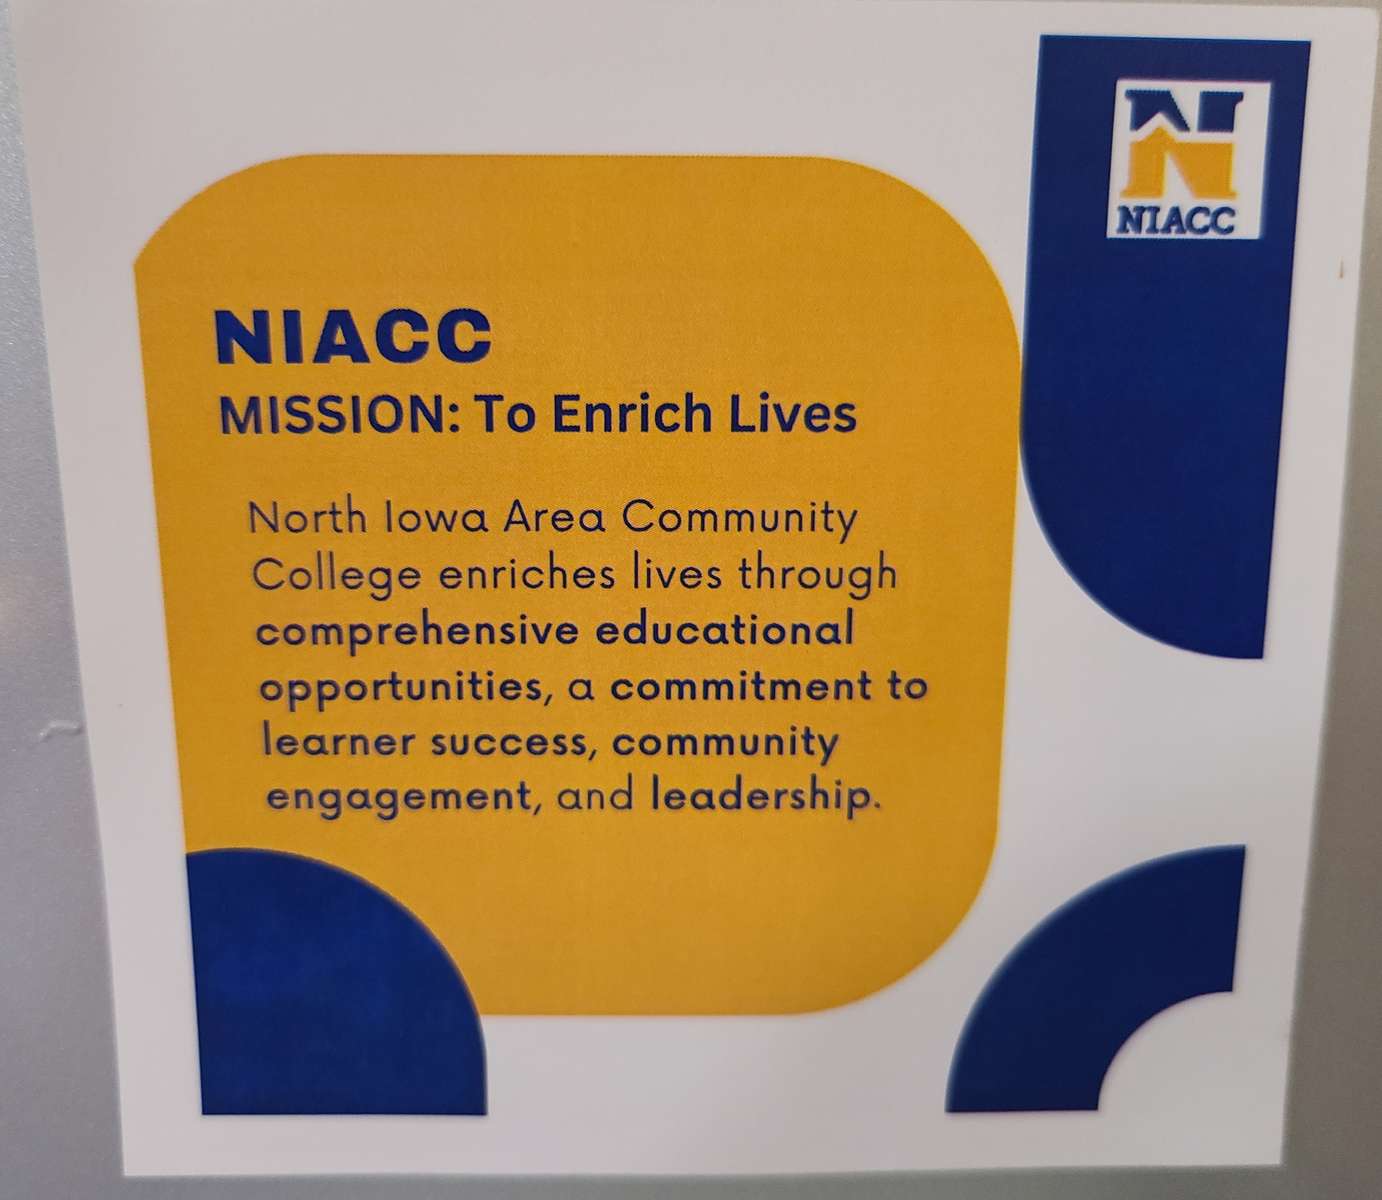 Declarația de misiune a NIACC puzzle online din fotografie